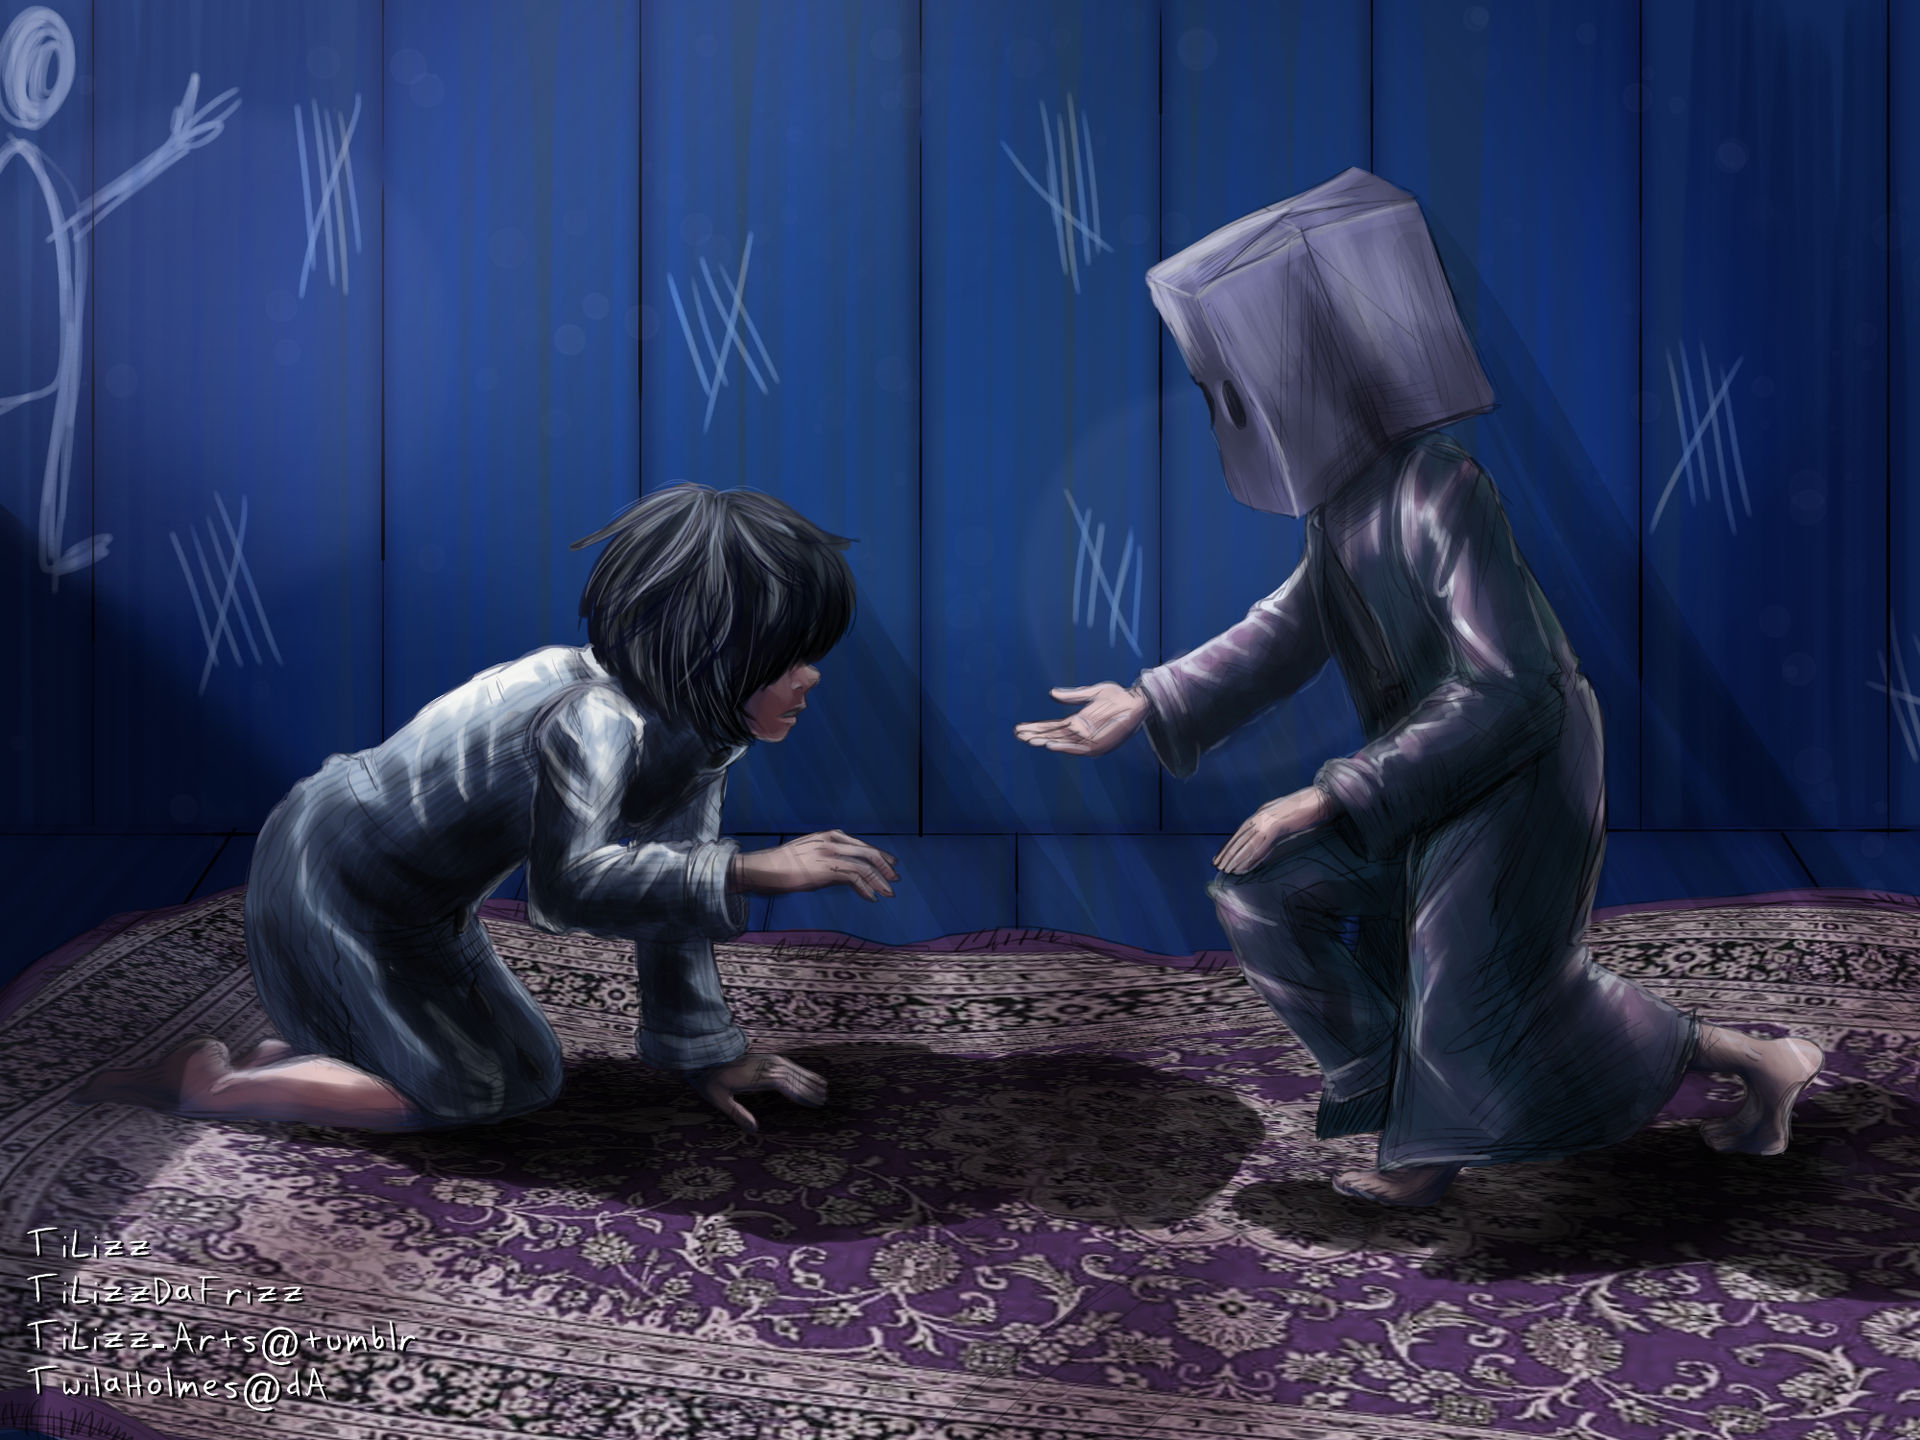 Mono - little nightmares 2 by PurpleCat203 on DeviantArt